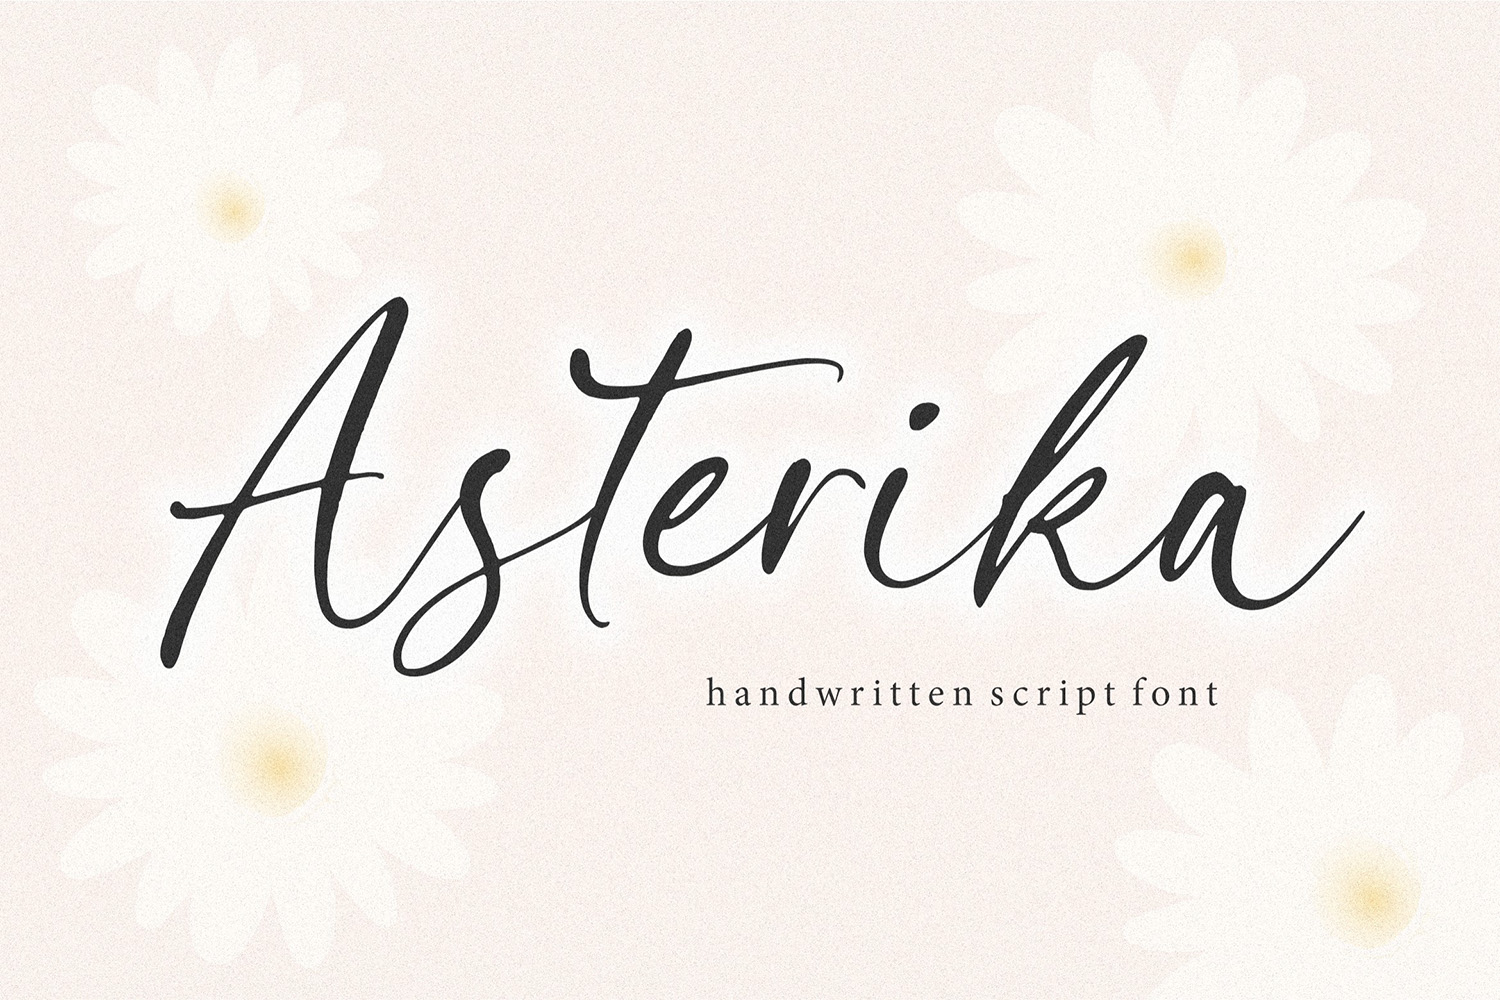 Asterika Free Font